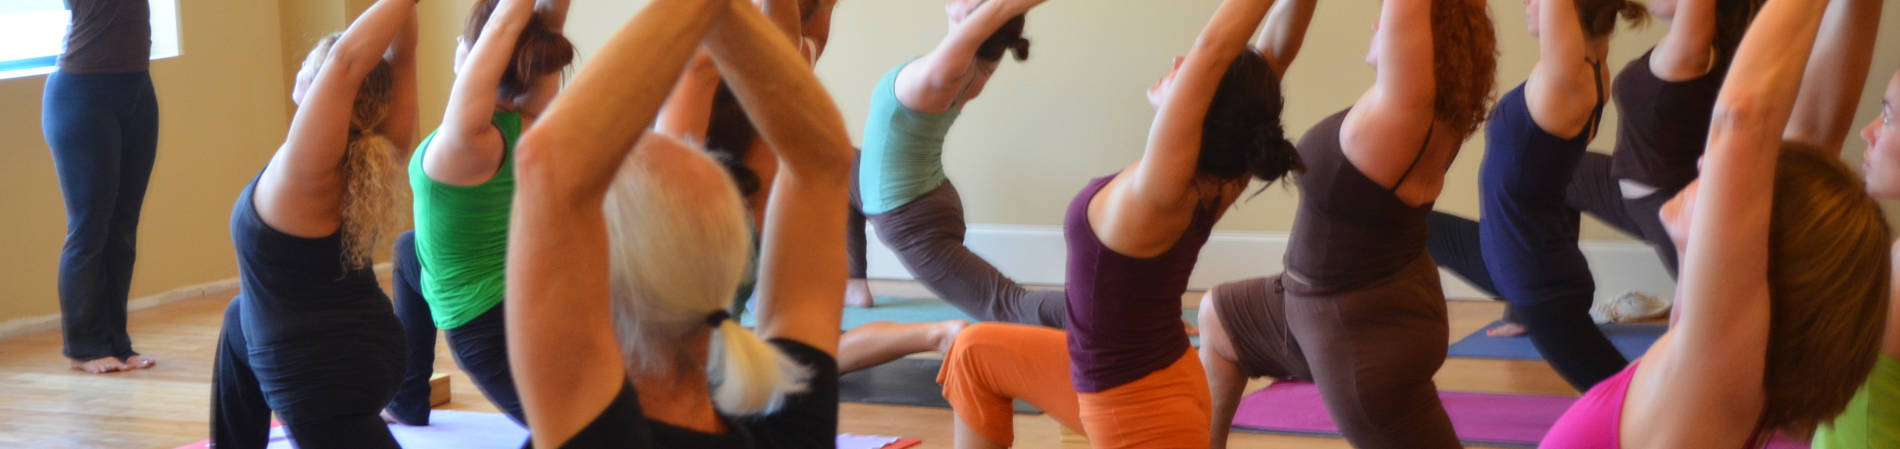 Aulas yoga